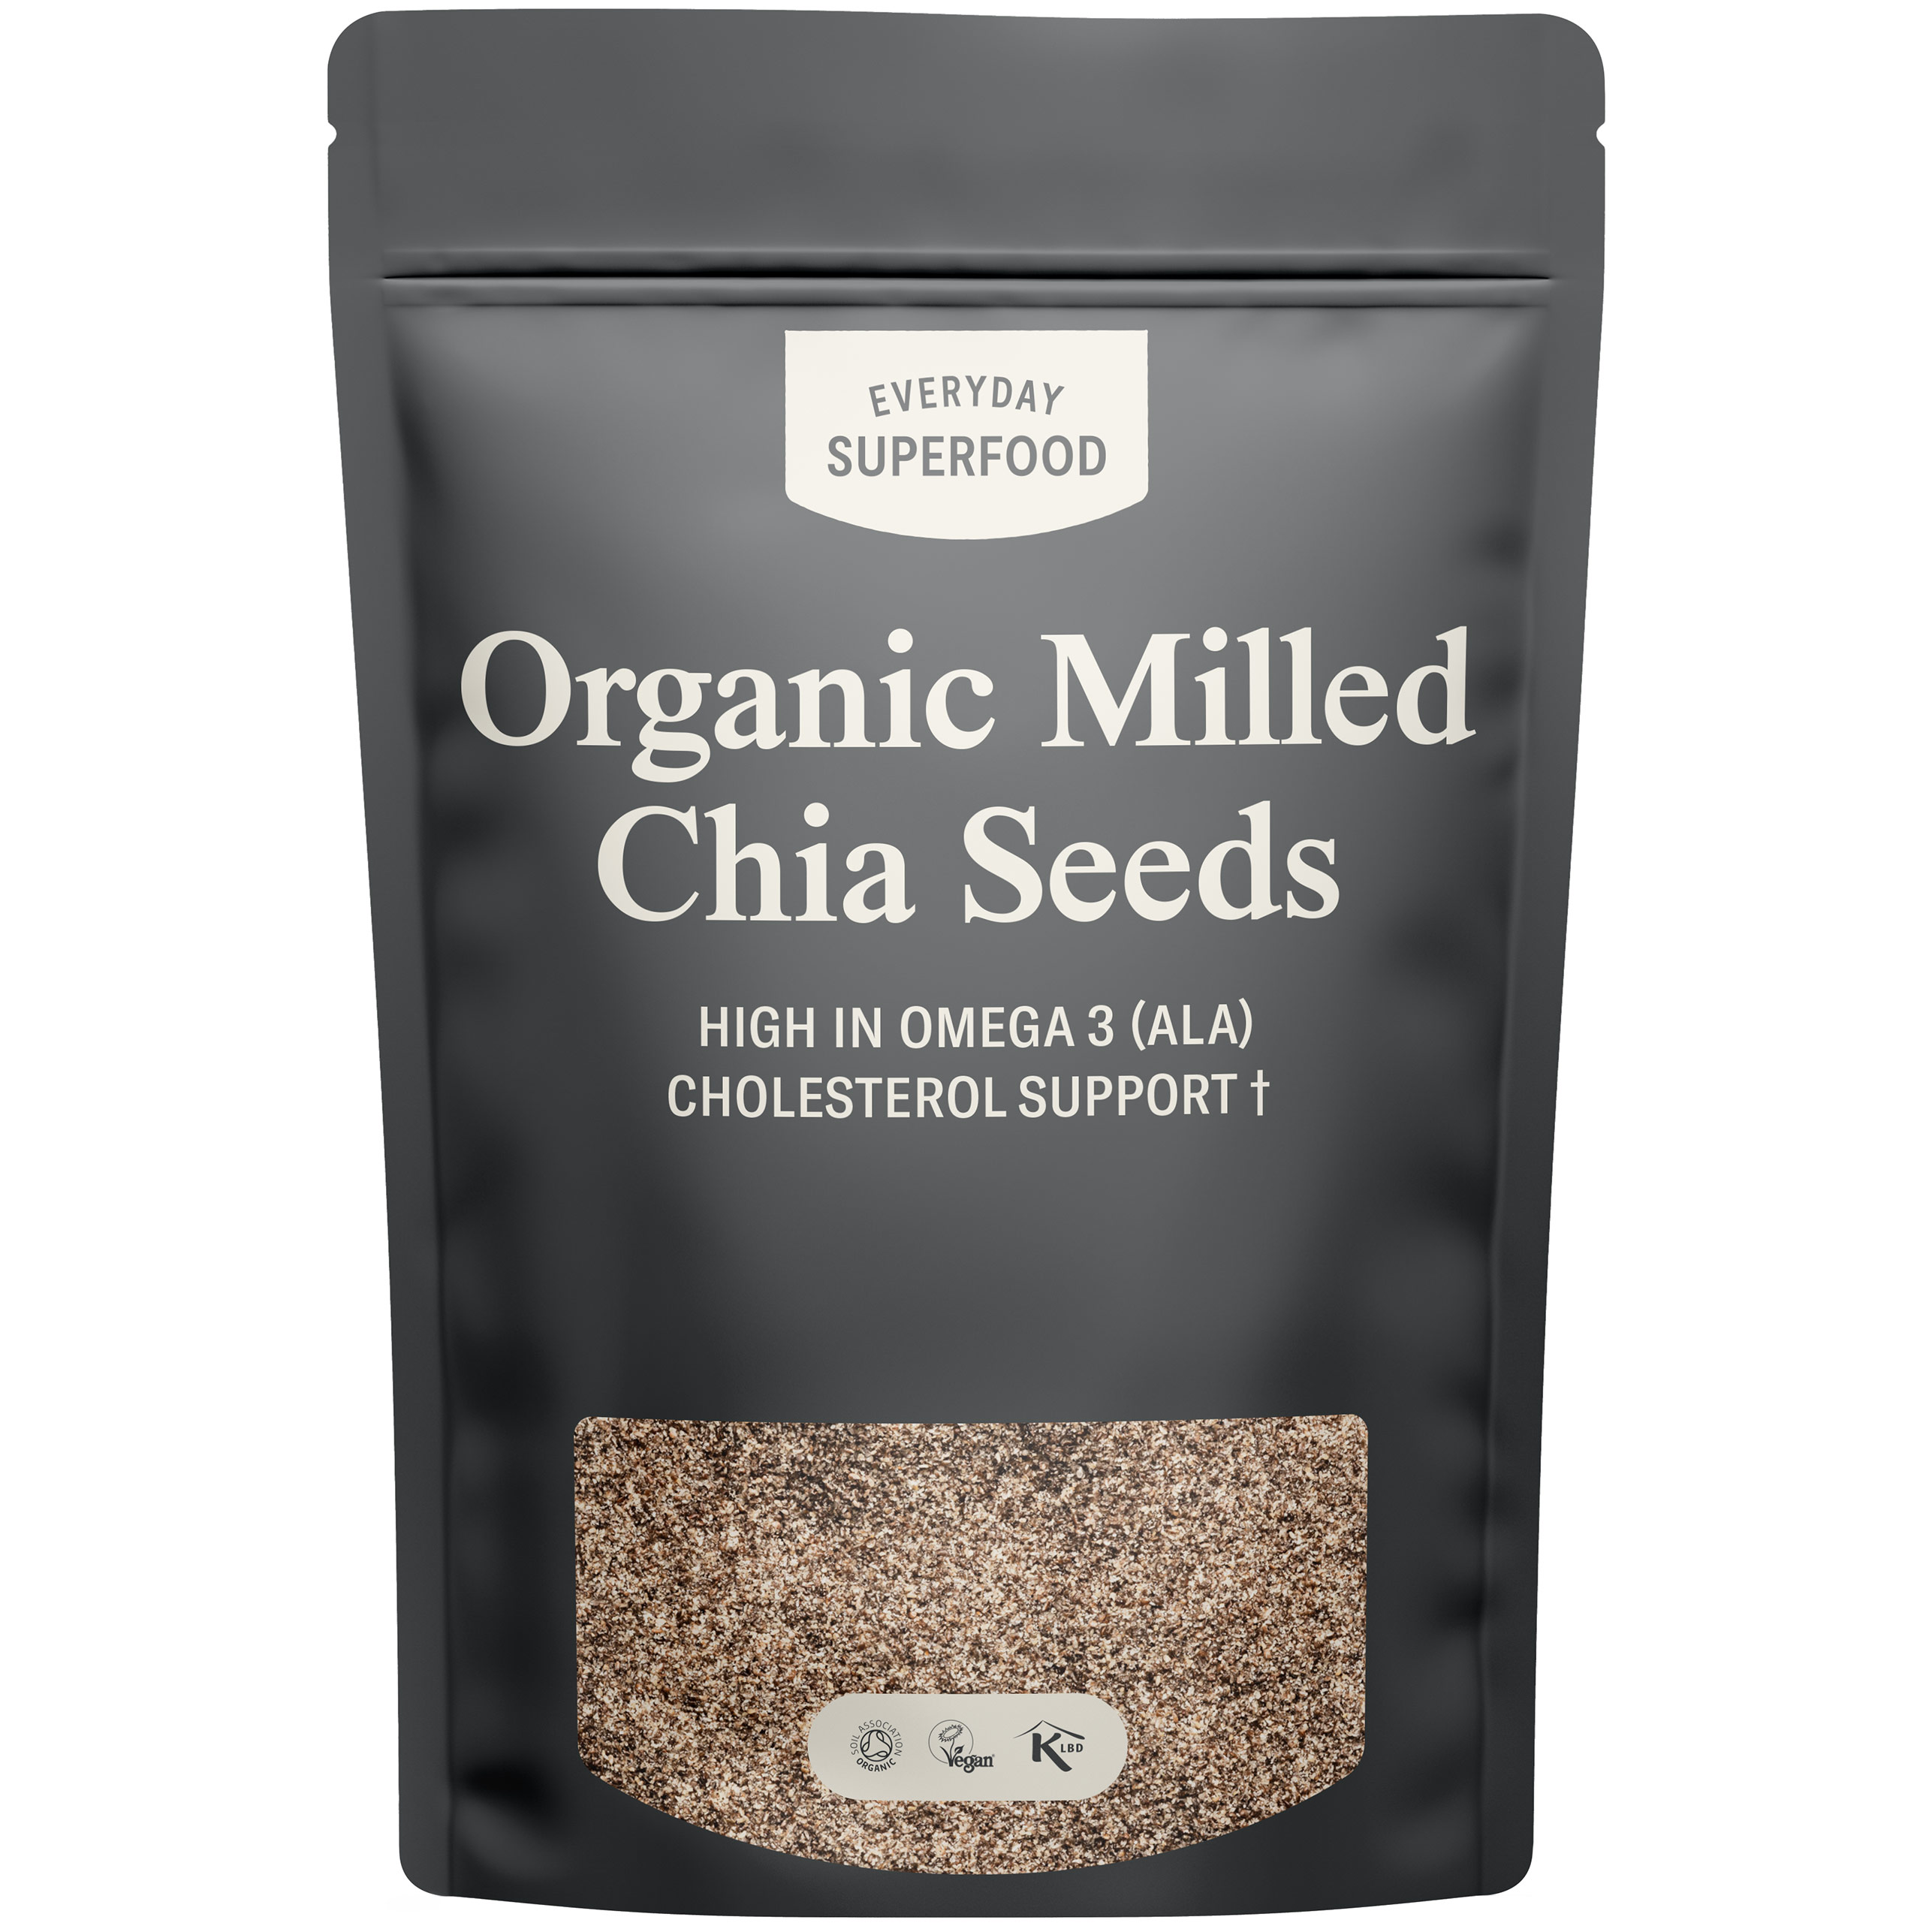 Organic Milled Chia Seeds